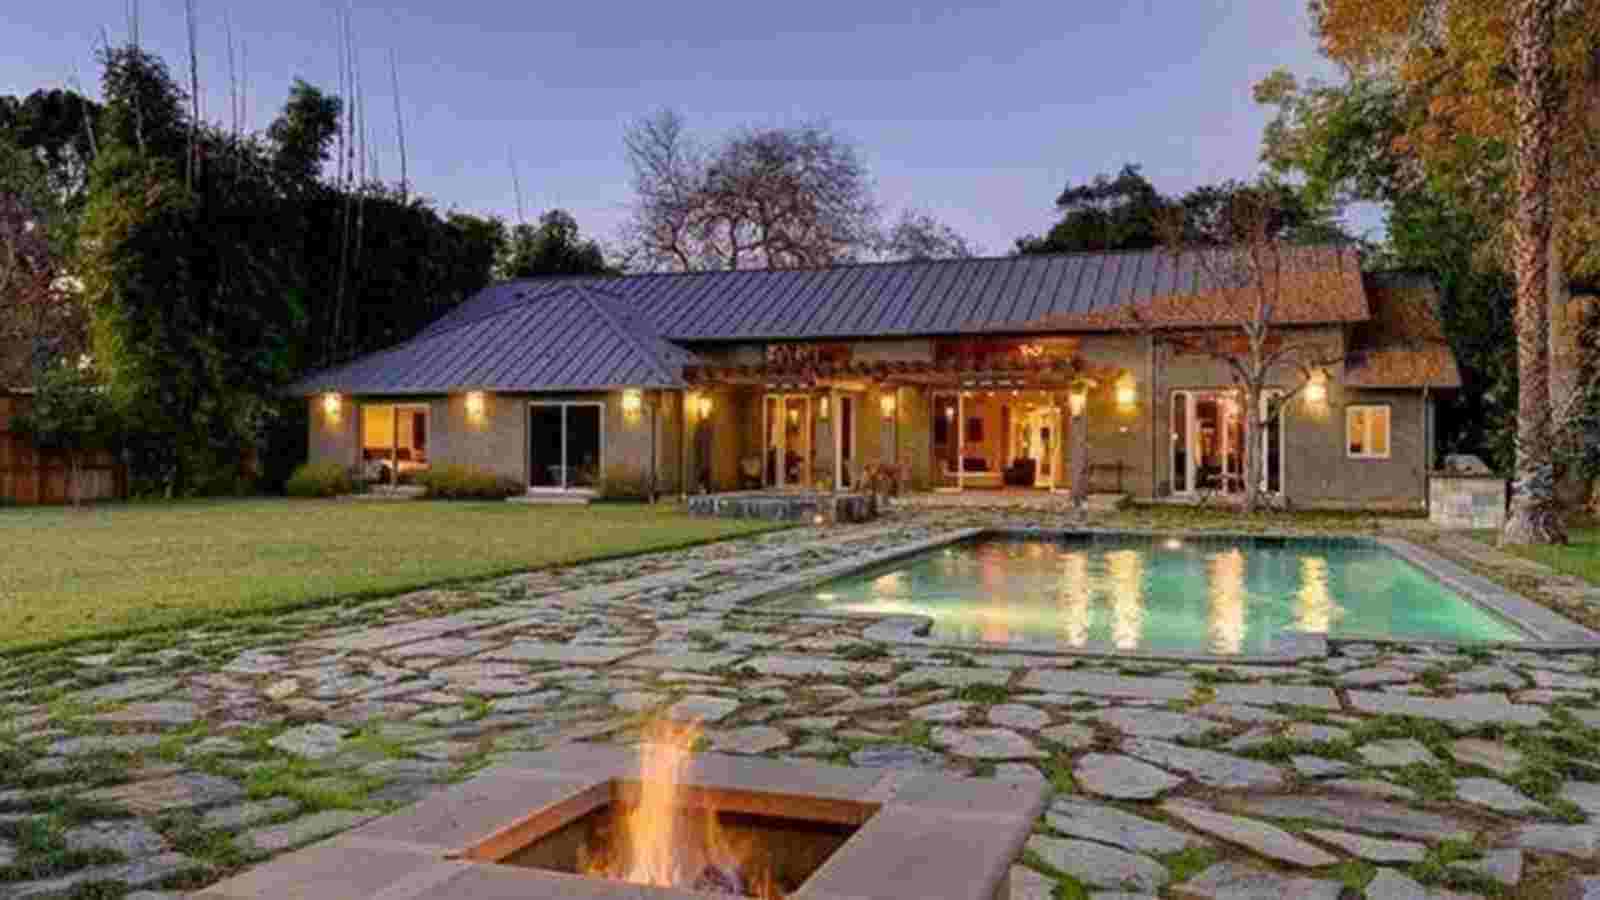 Megan Fox's residence at Toluca Lake in Los Angeles